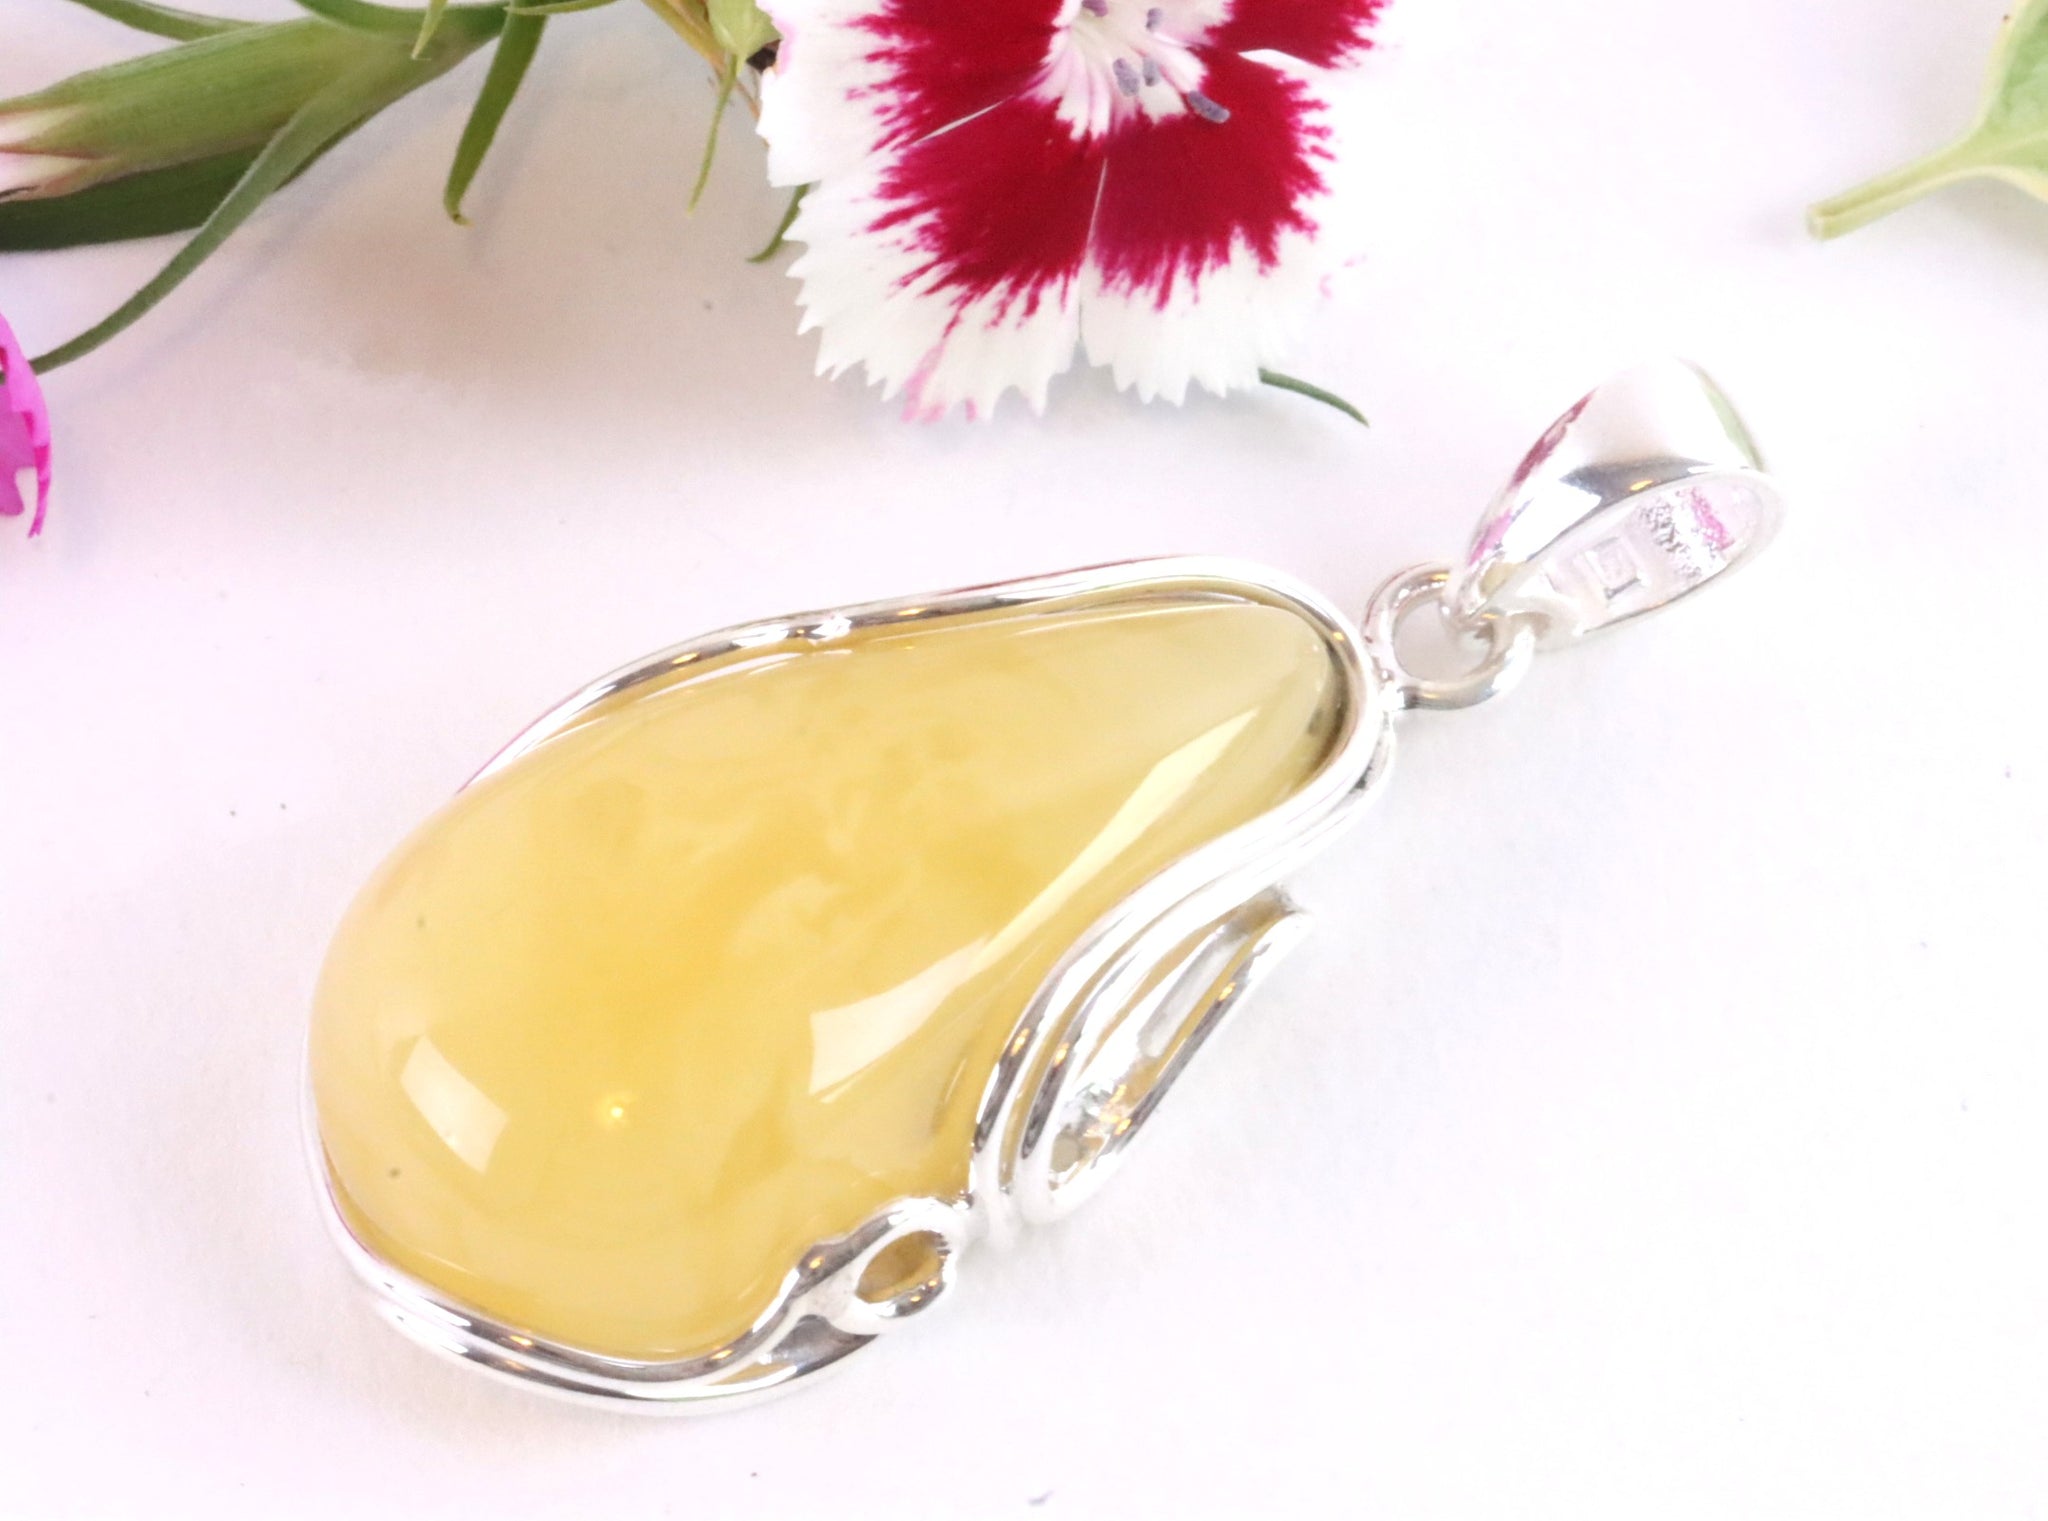 Butter Amber Gemstone Pendant